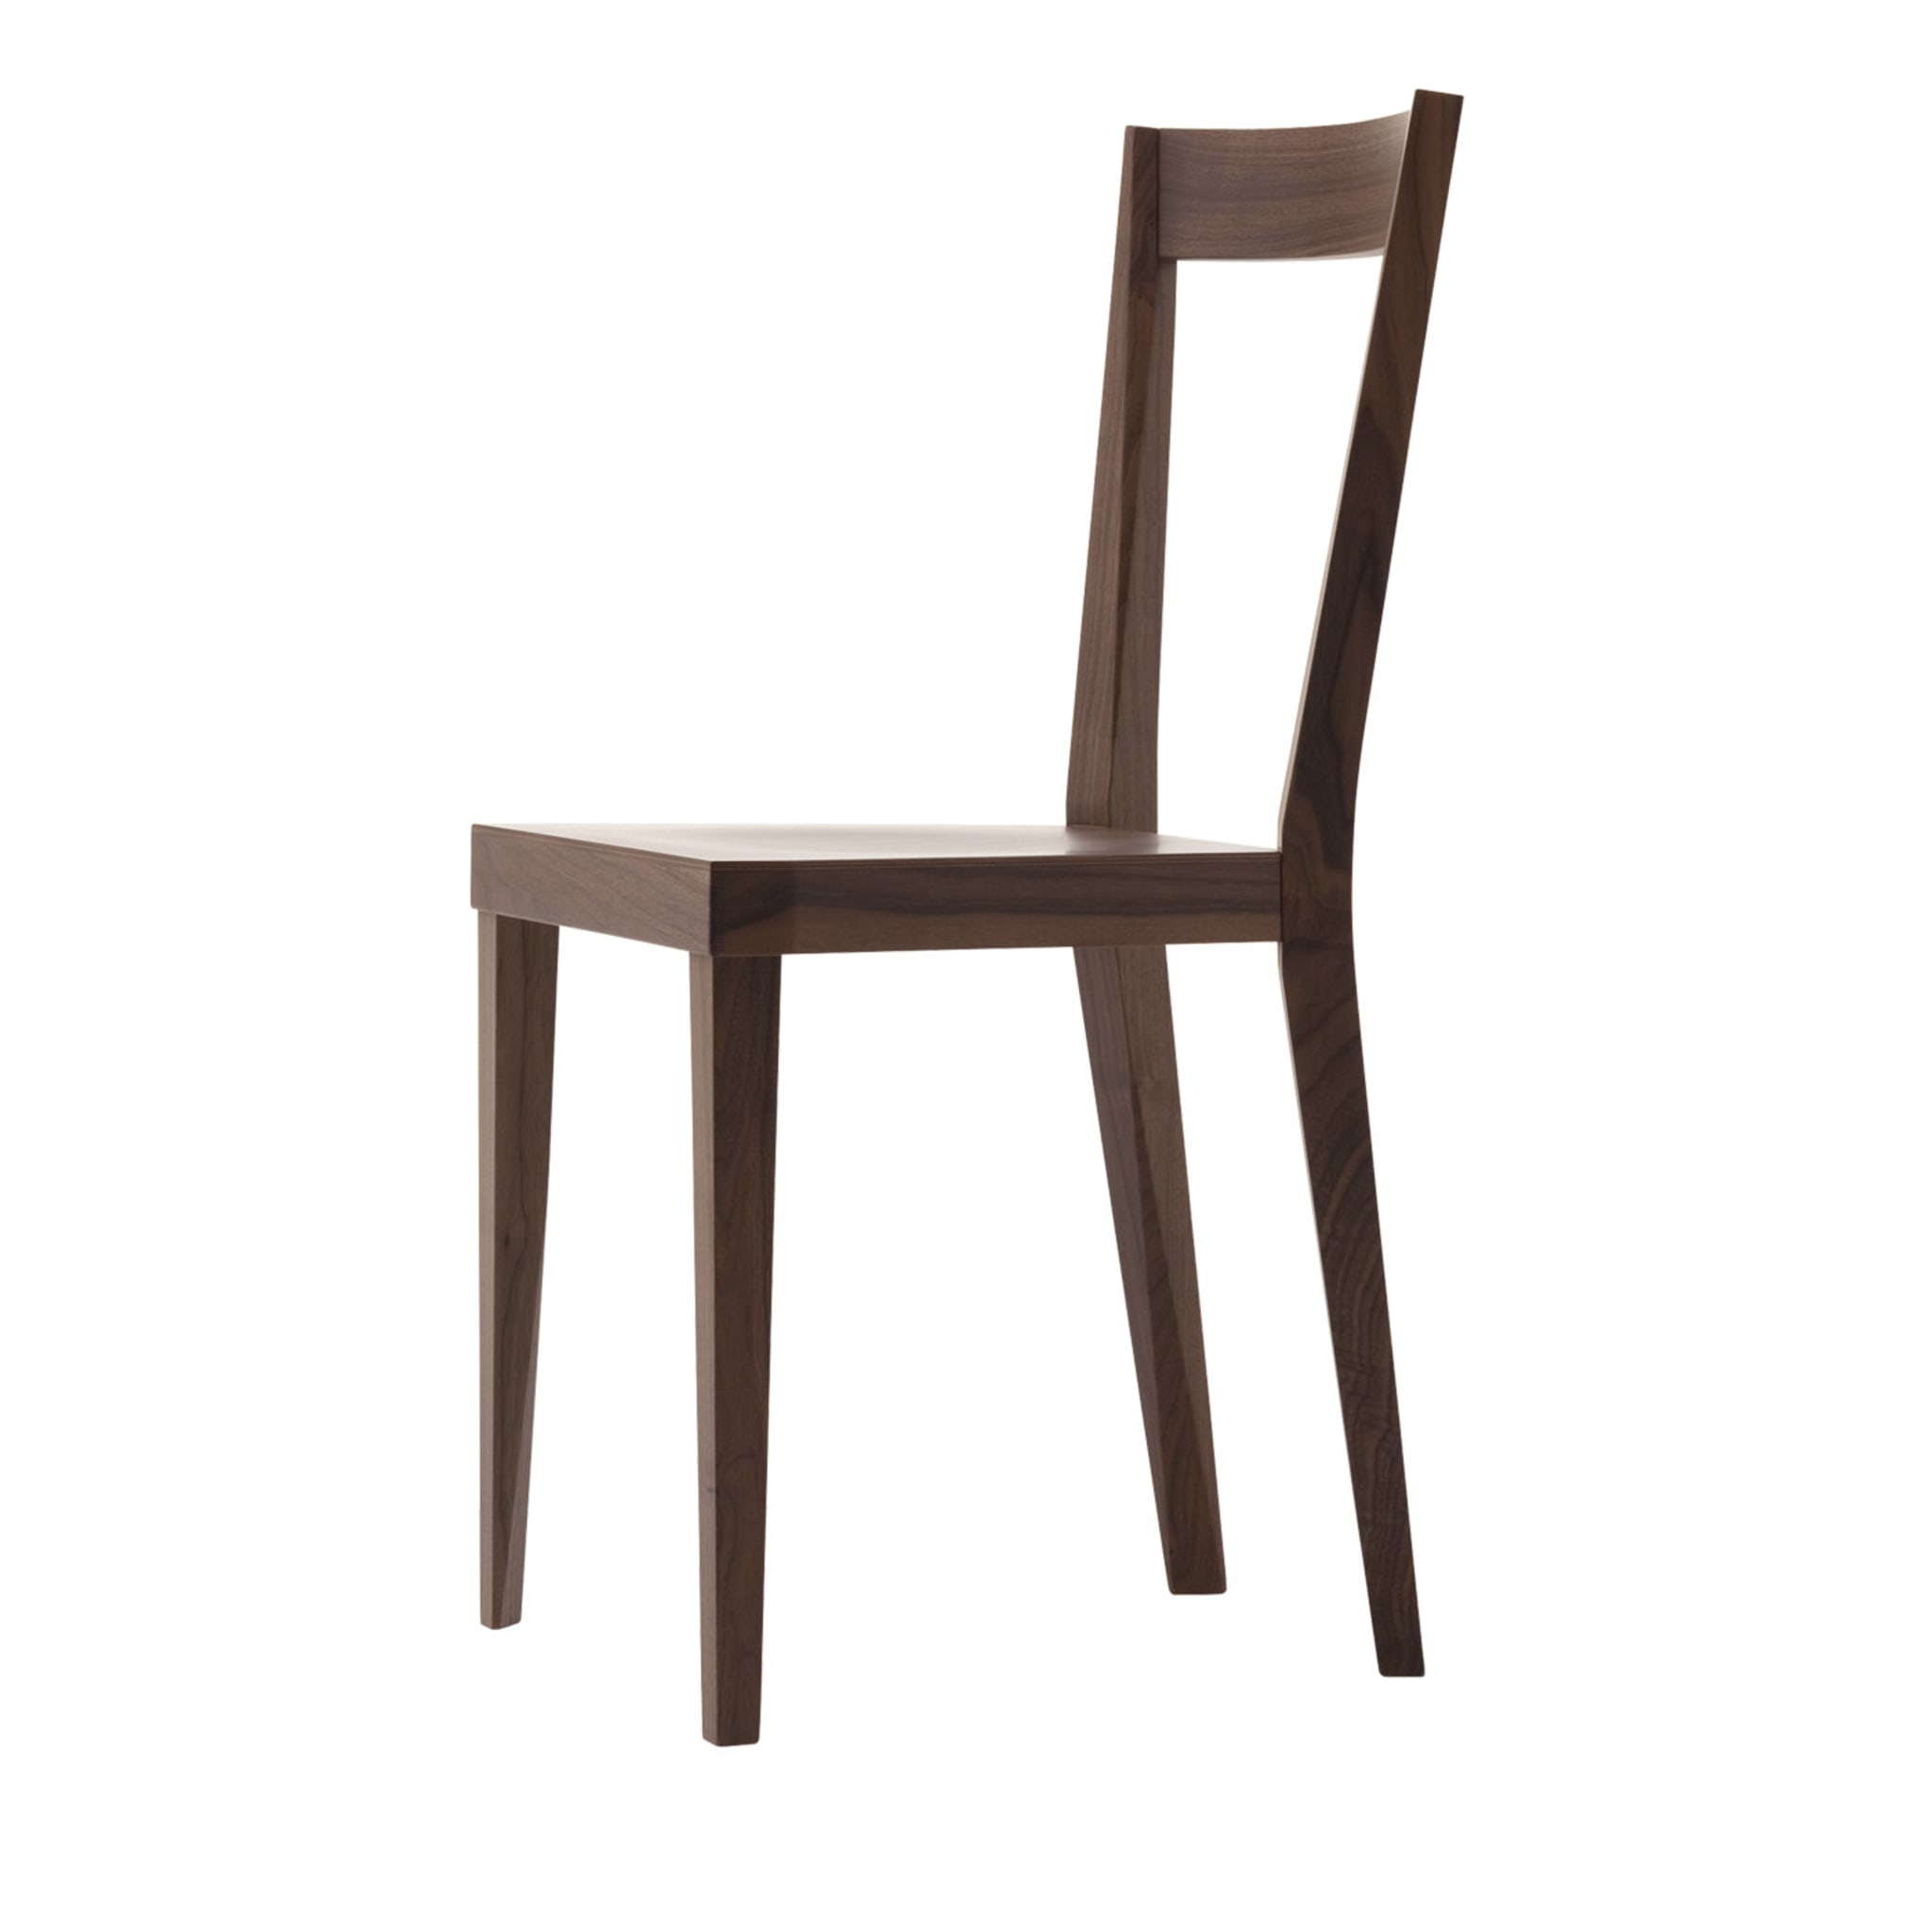 Set of 2 Livia Chairs in Dark Walnut Finish by Giò Ponti - Main view